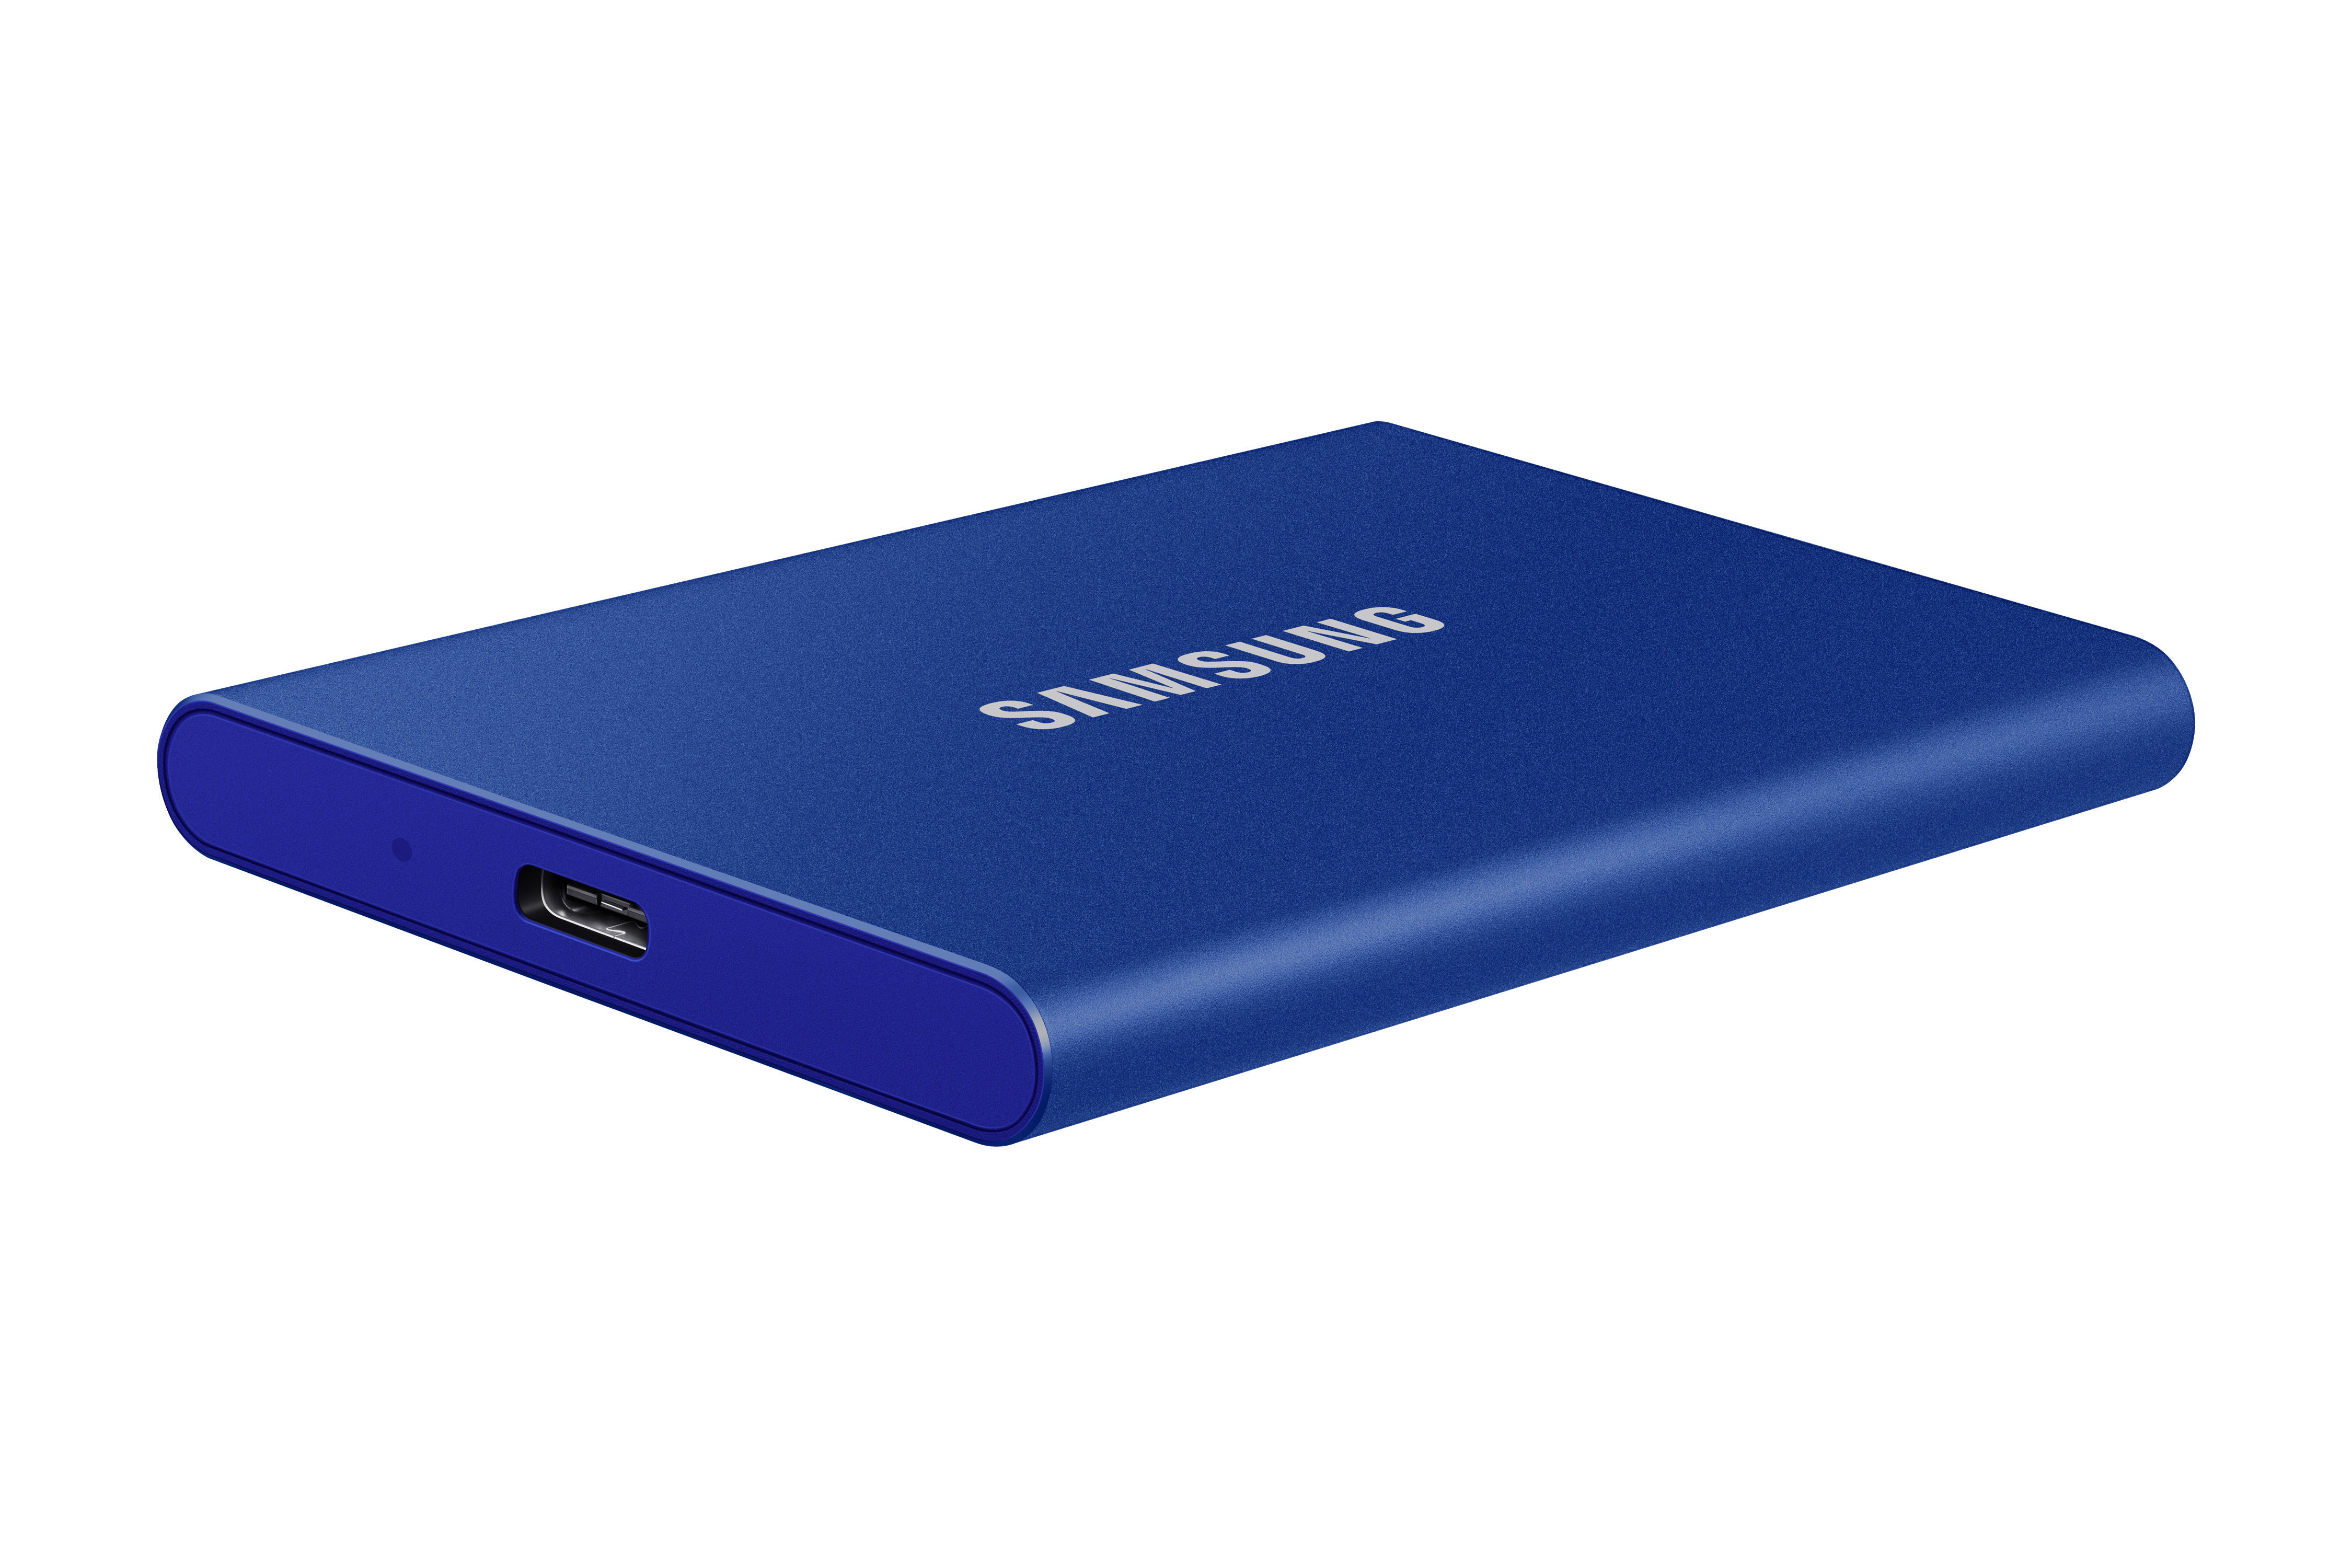 SAMSUNG Portable SSD T7 SSD, TB Festplatte, Indigo extern, blue PC/Mac 2